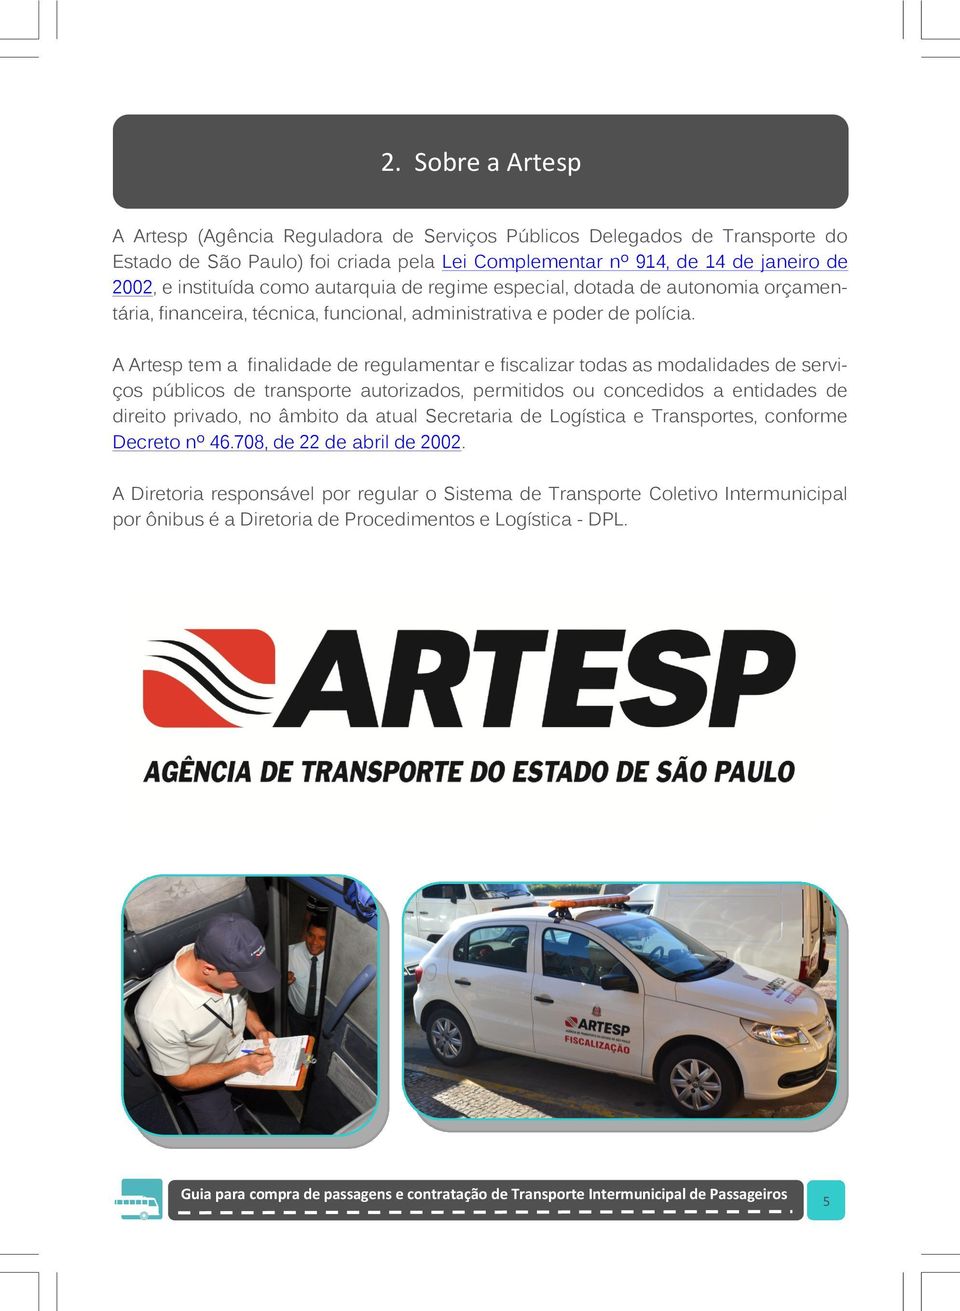 A Artesp tem a finalidade de regulamentar e fiscalizar todas as modalidades de serviços públicos de transporte autorizados, permitidos ou concedidos a entidades de direito privado, no âmbito